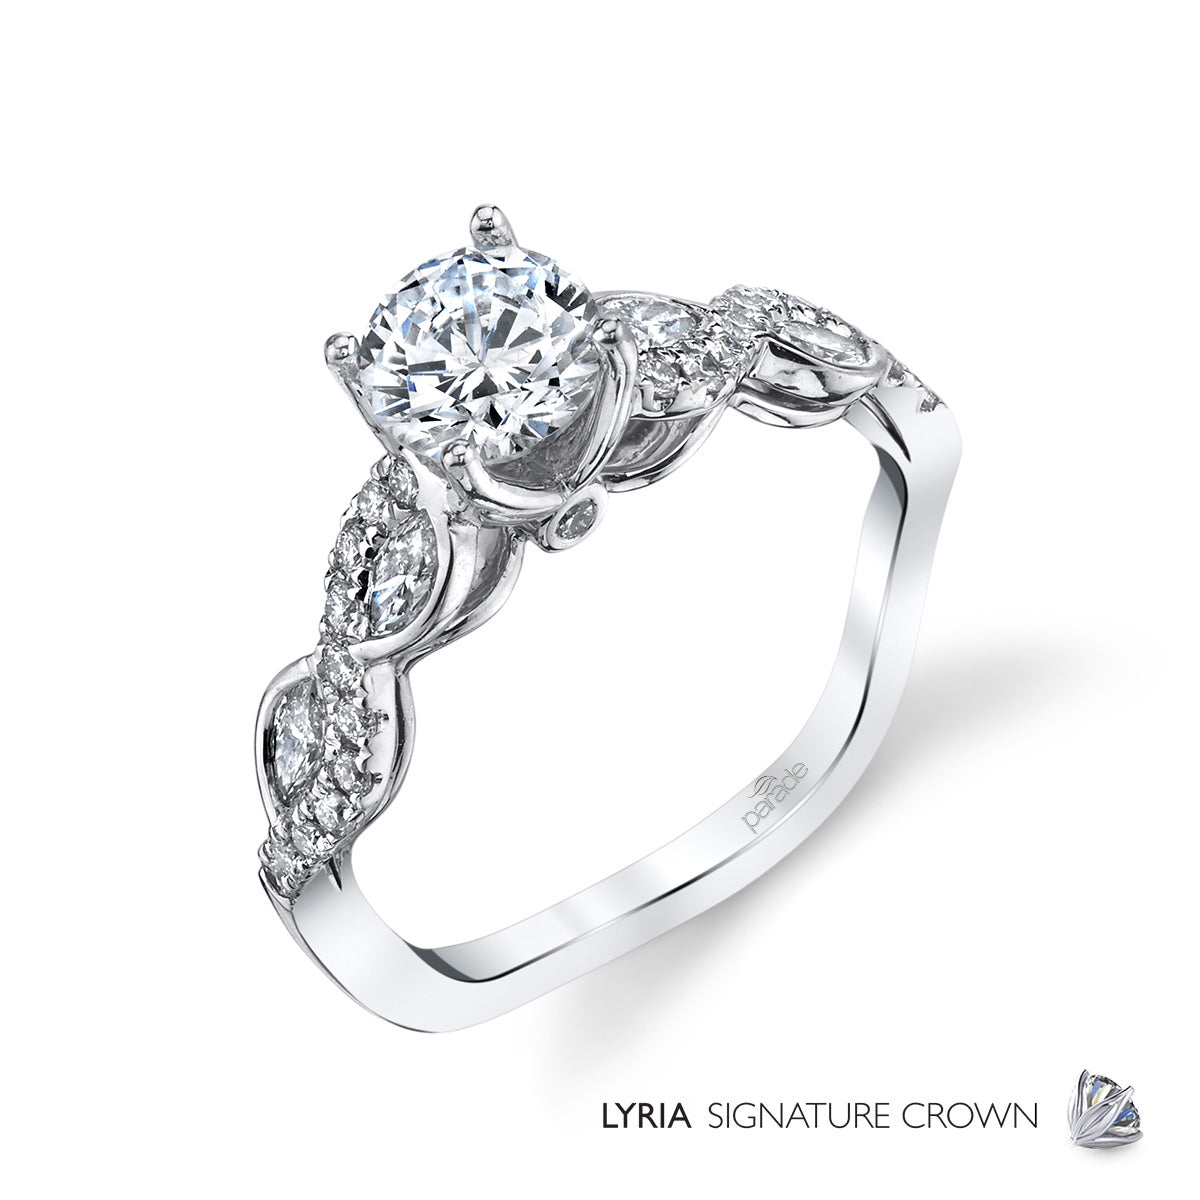 Intertwined Set Engagement Ring - Michael E. Minden Diamond Jewelers